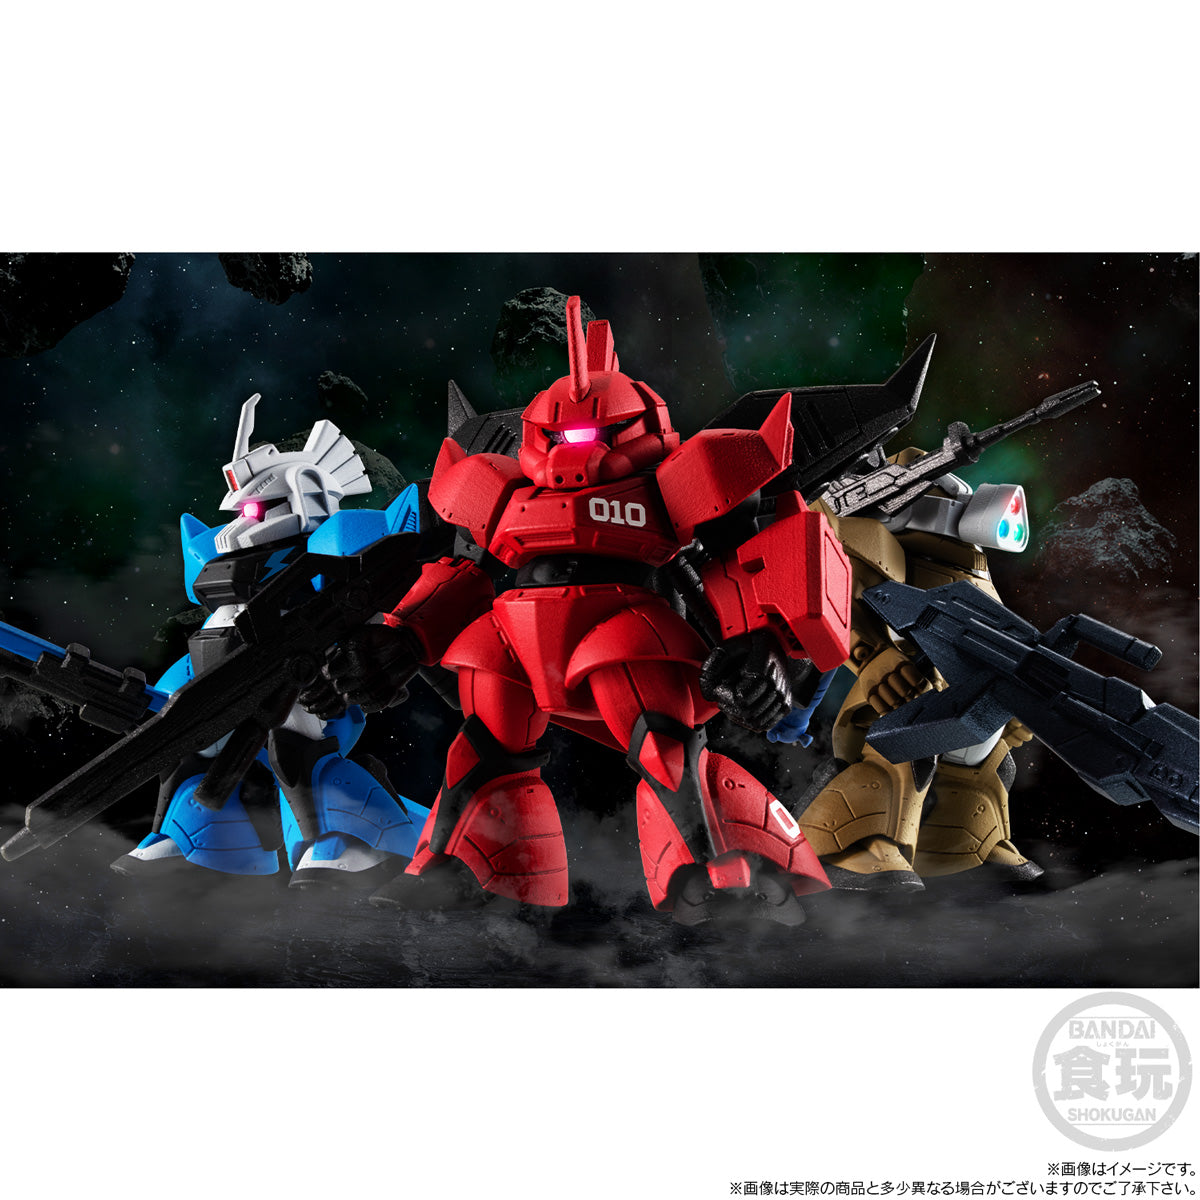 Bandai - Shokugan - Mobile Suit Gundam - FW Gundam Converge: Core - The Return of Johnny Ridden Set - Marvelous Toys